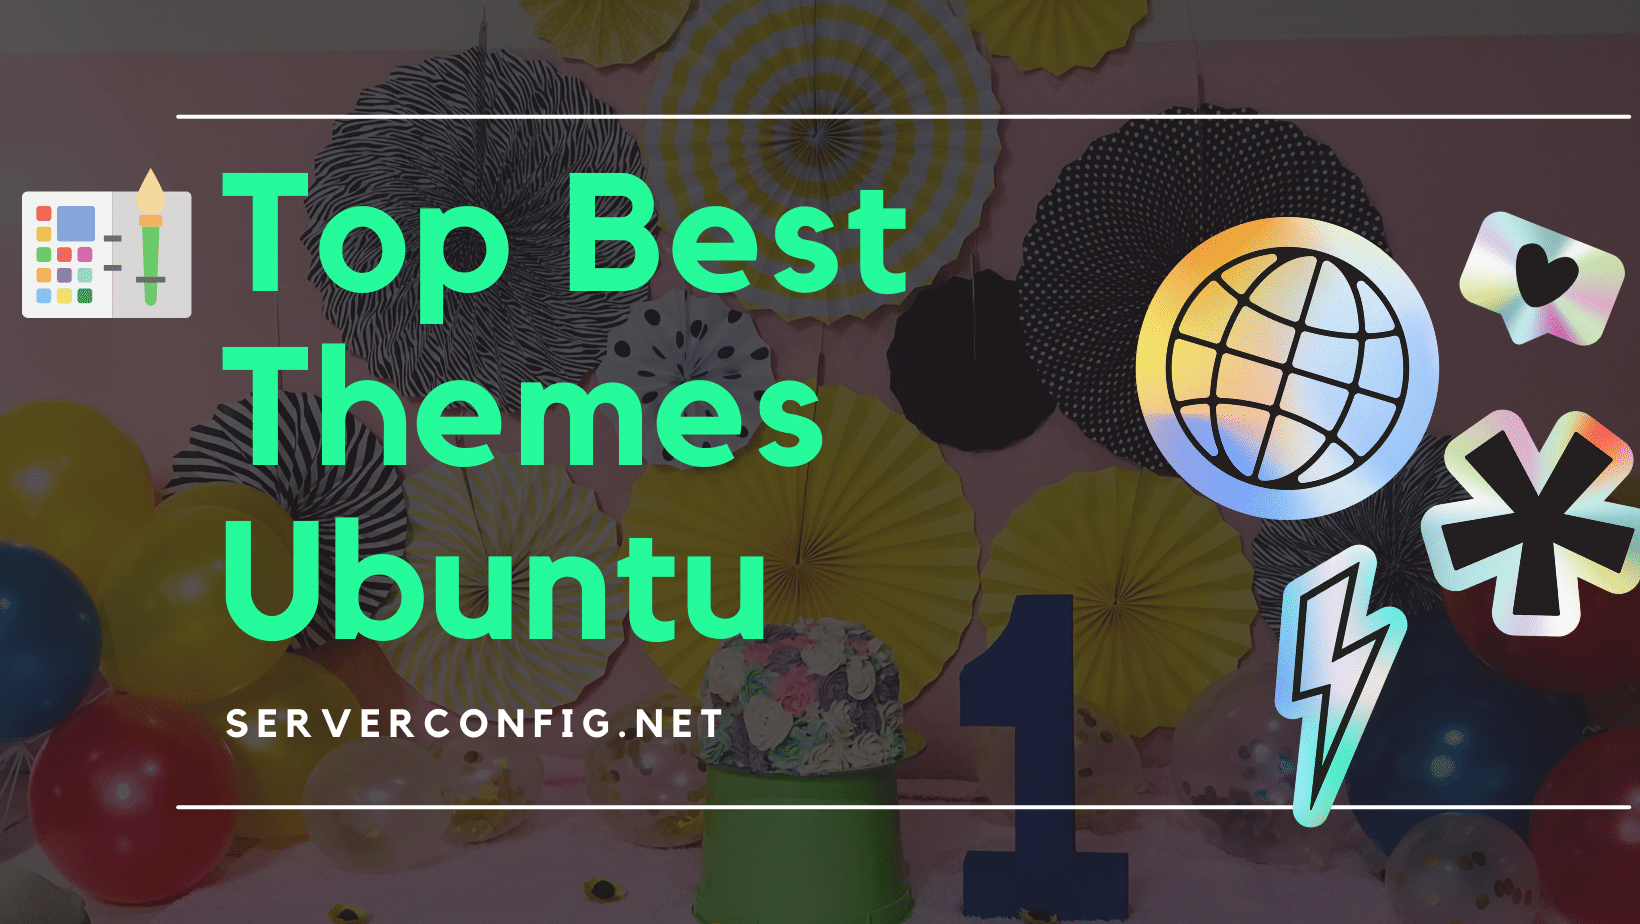 Top Best Themes Ubuntu.png